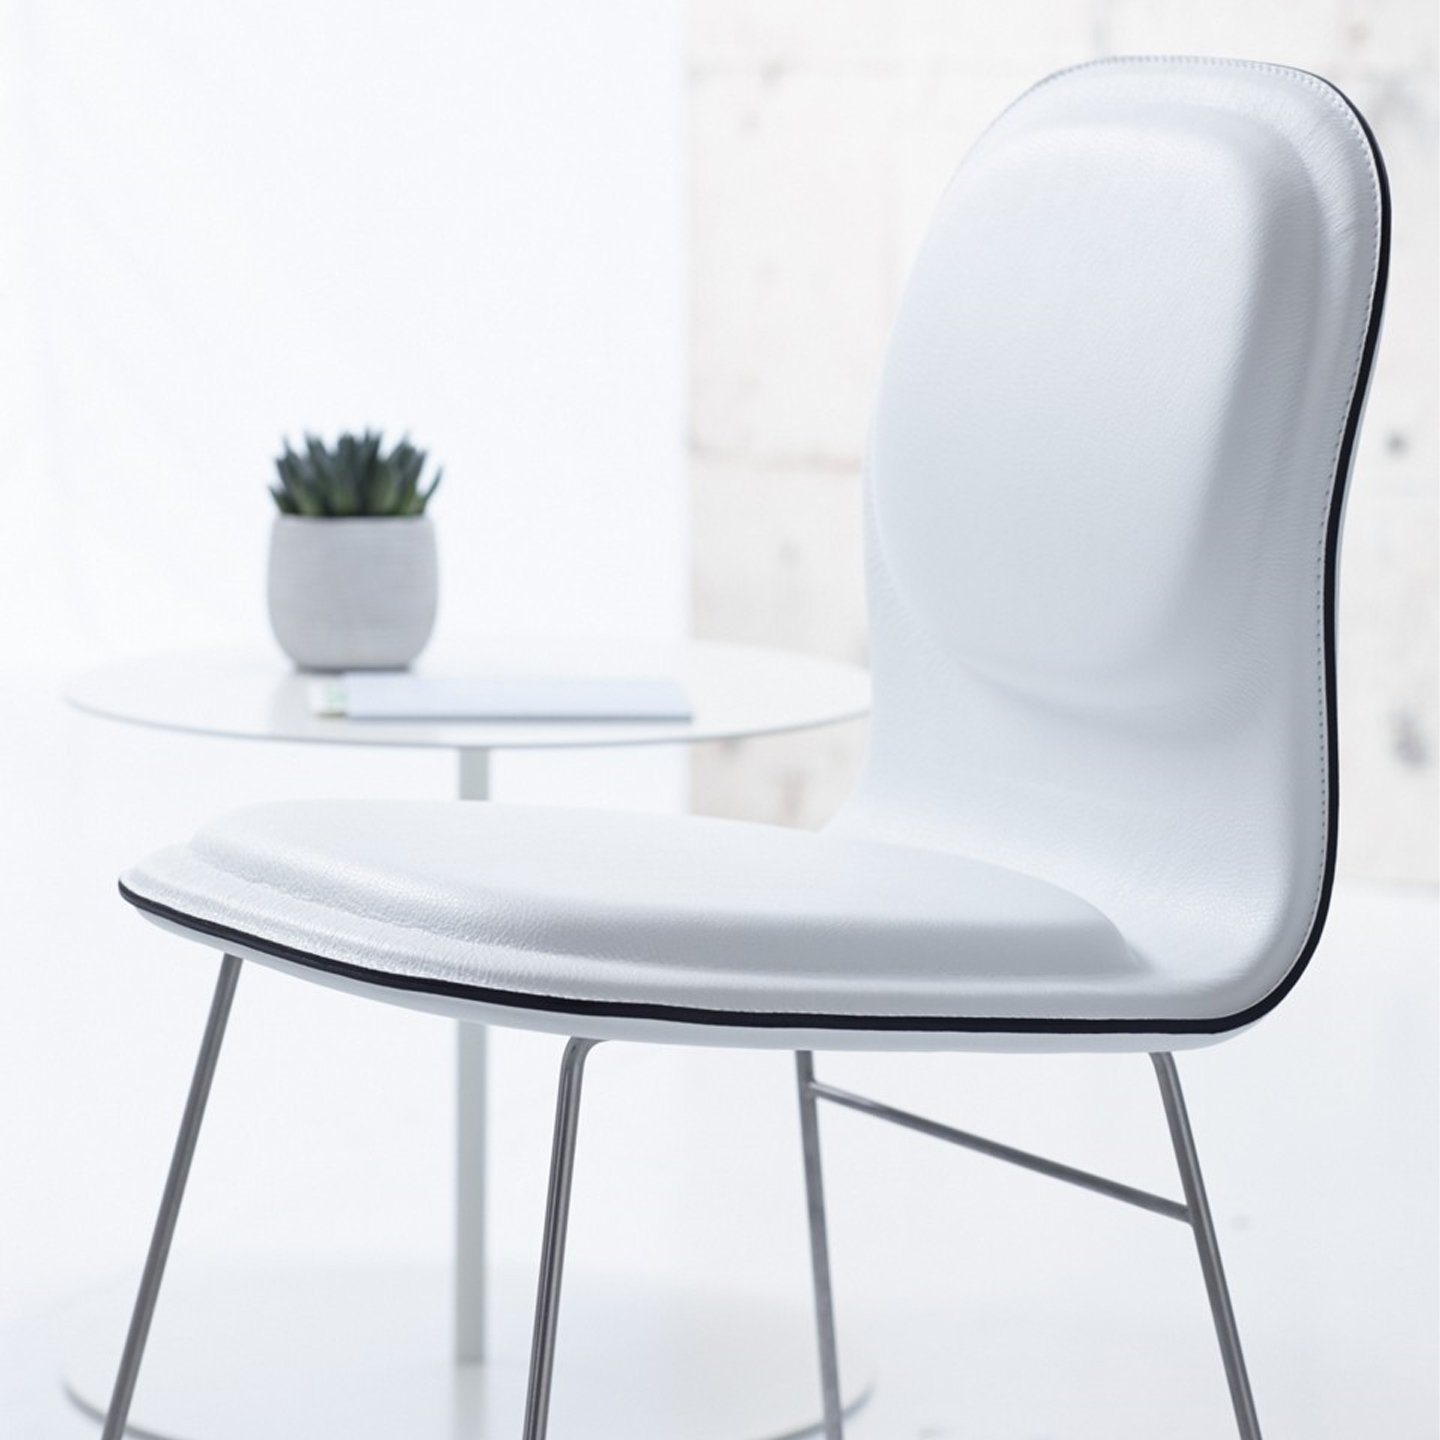 Haworth Hi Pad chair in white upholstery